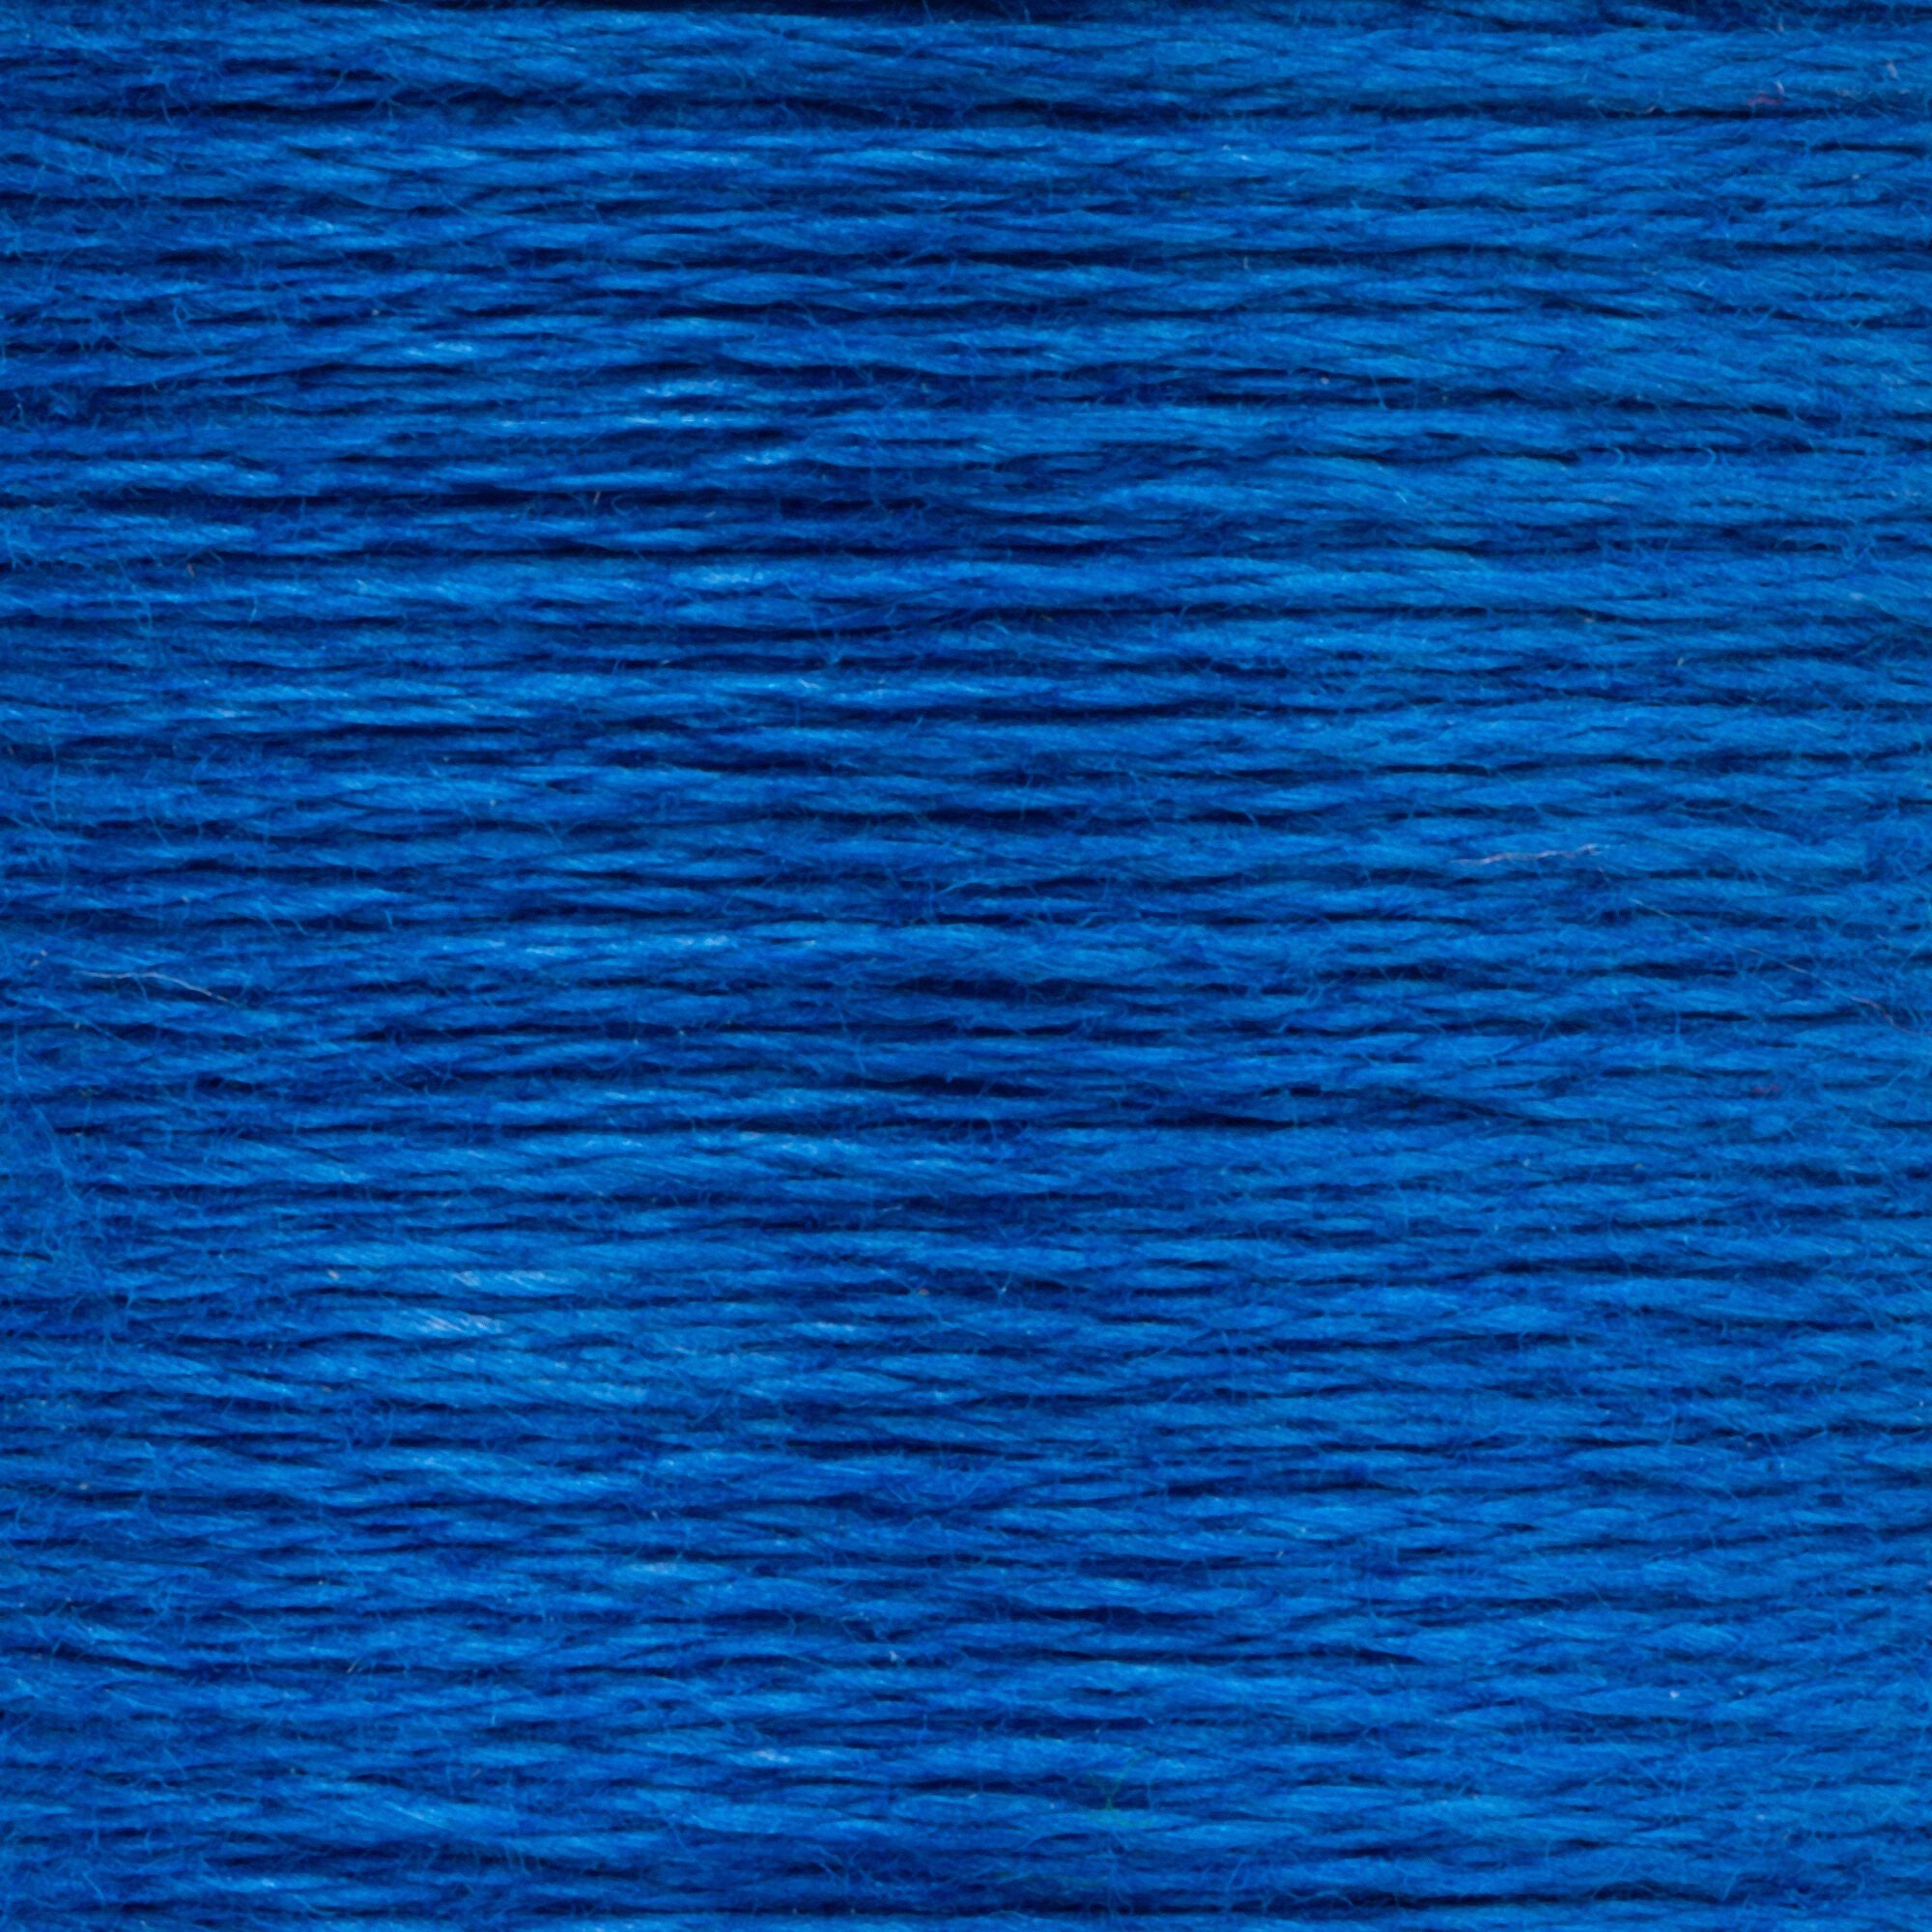 Anchor Embroidery Floss in Cobalt Blue Med Dk